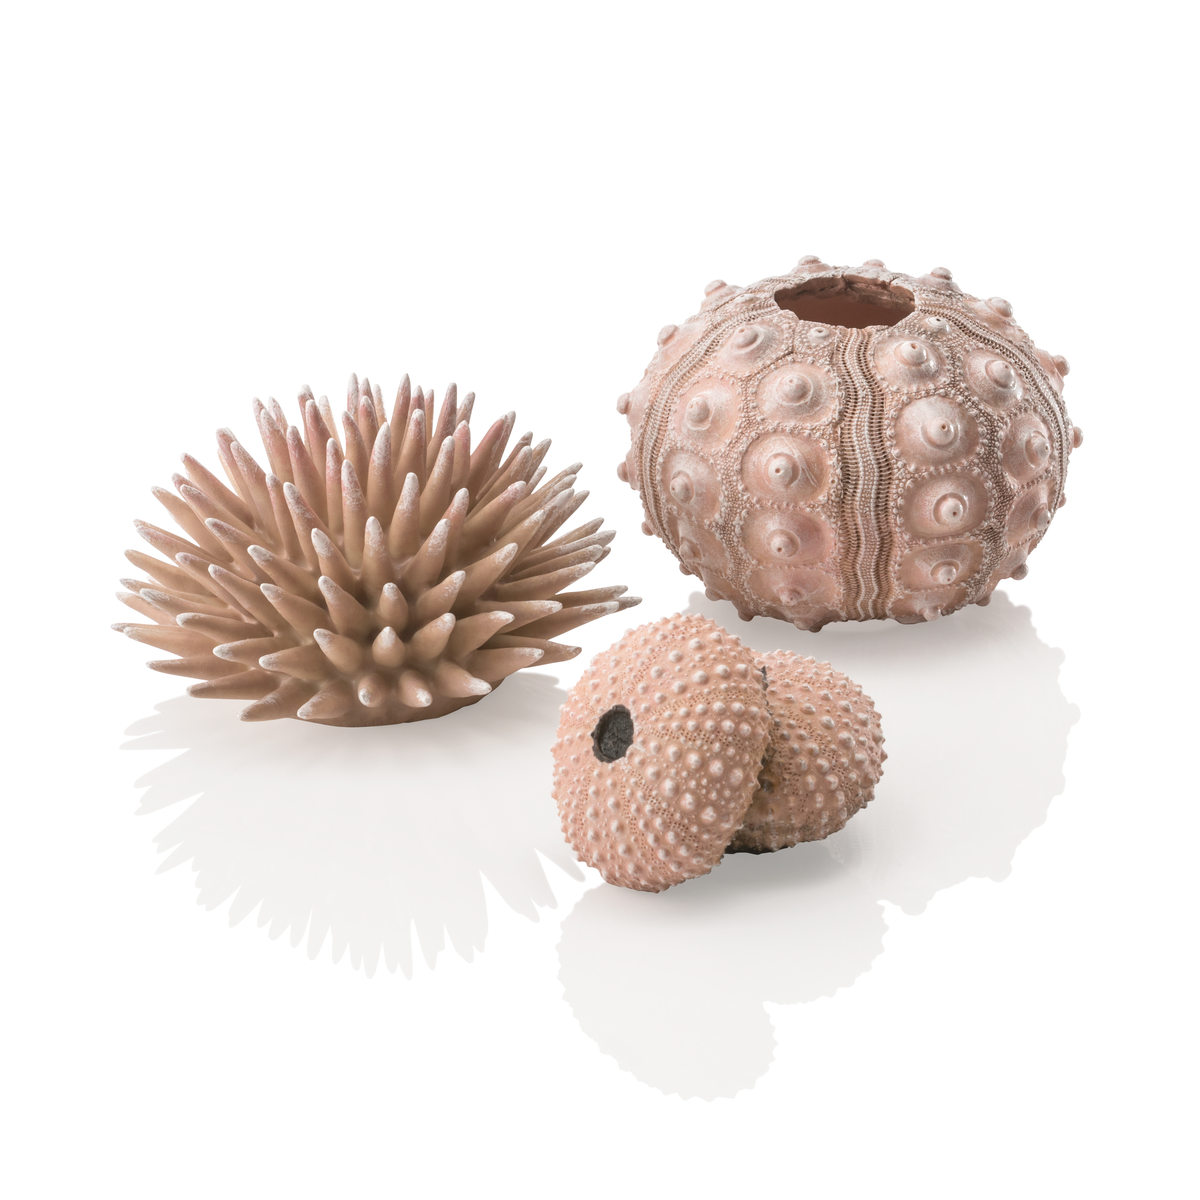 Oase BiOrb Sea Urchins set of 3 - Natural